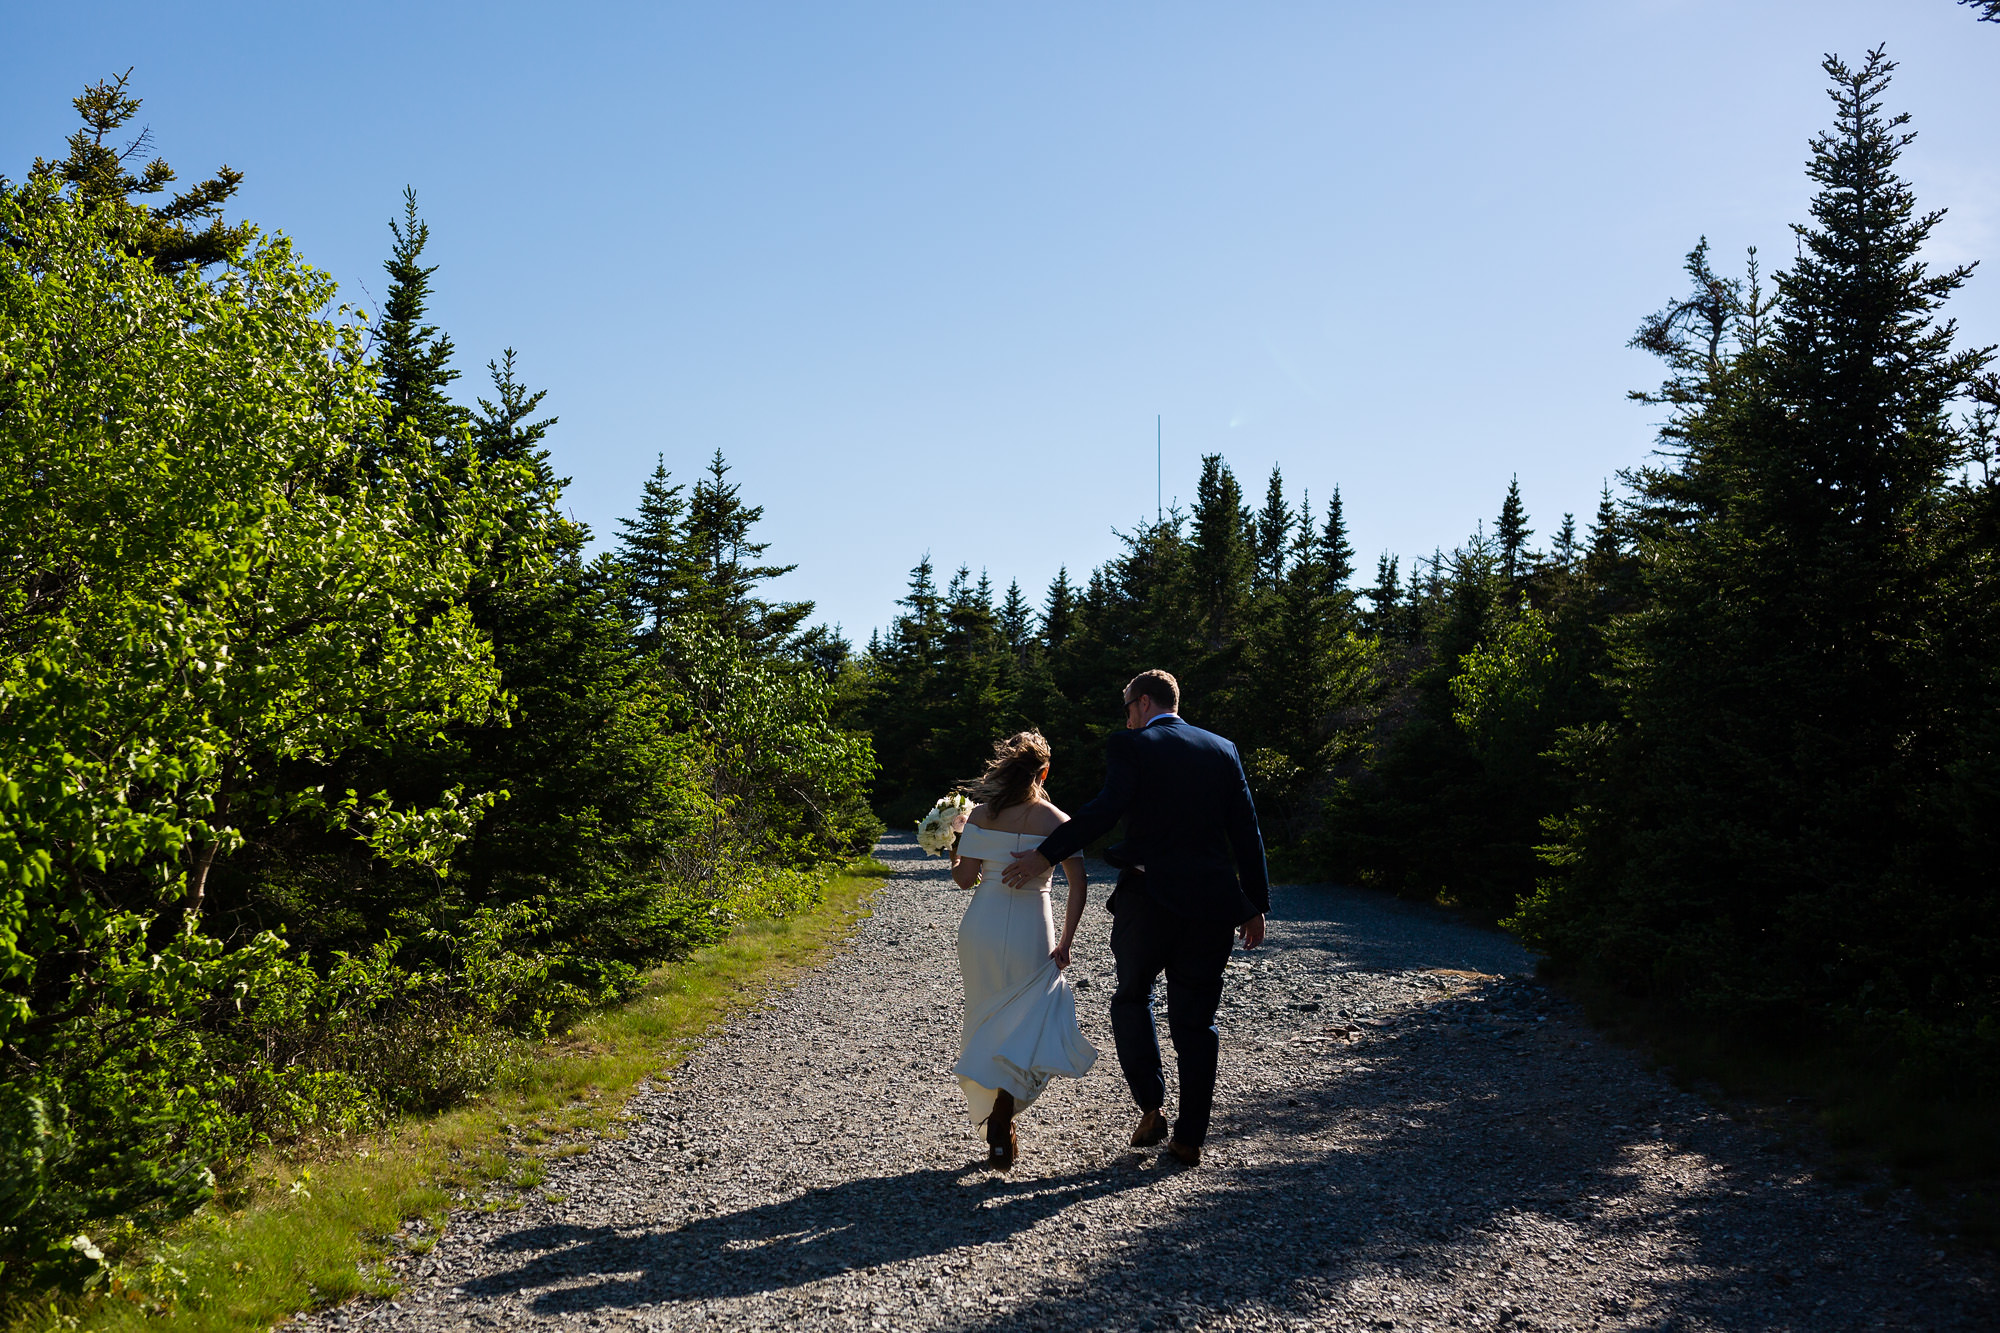 Wedding ceremony on Cadillac Mountain in Acadia